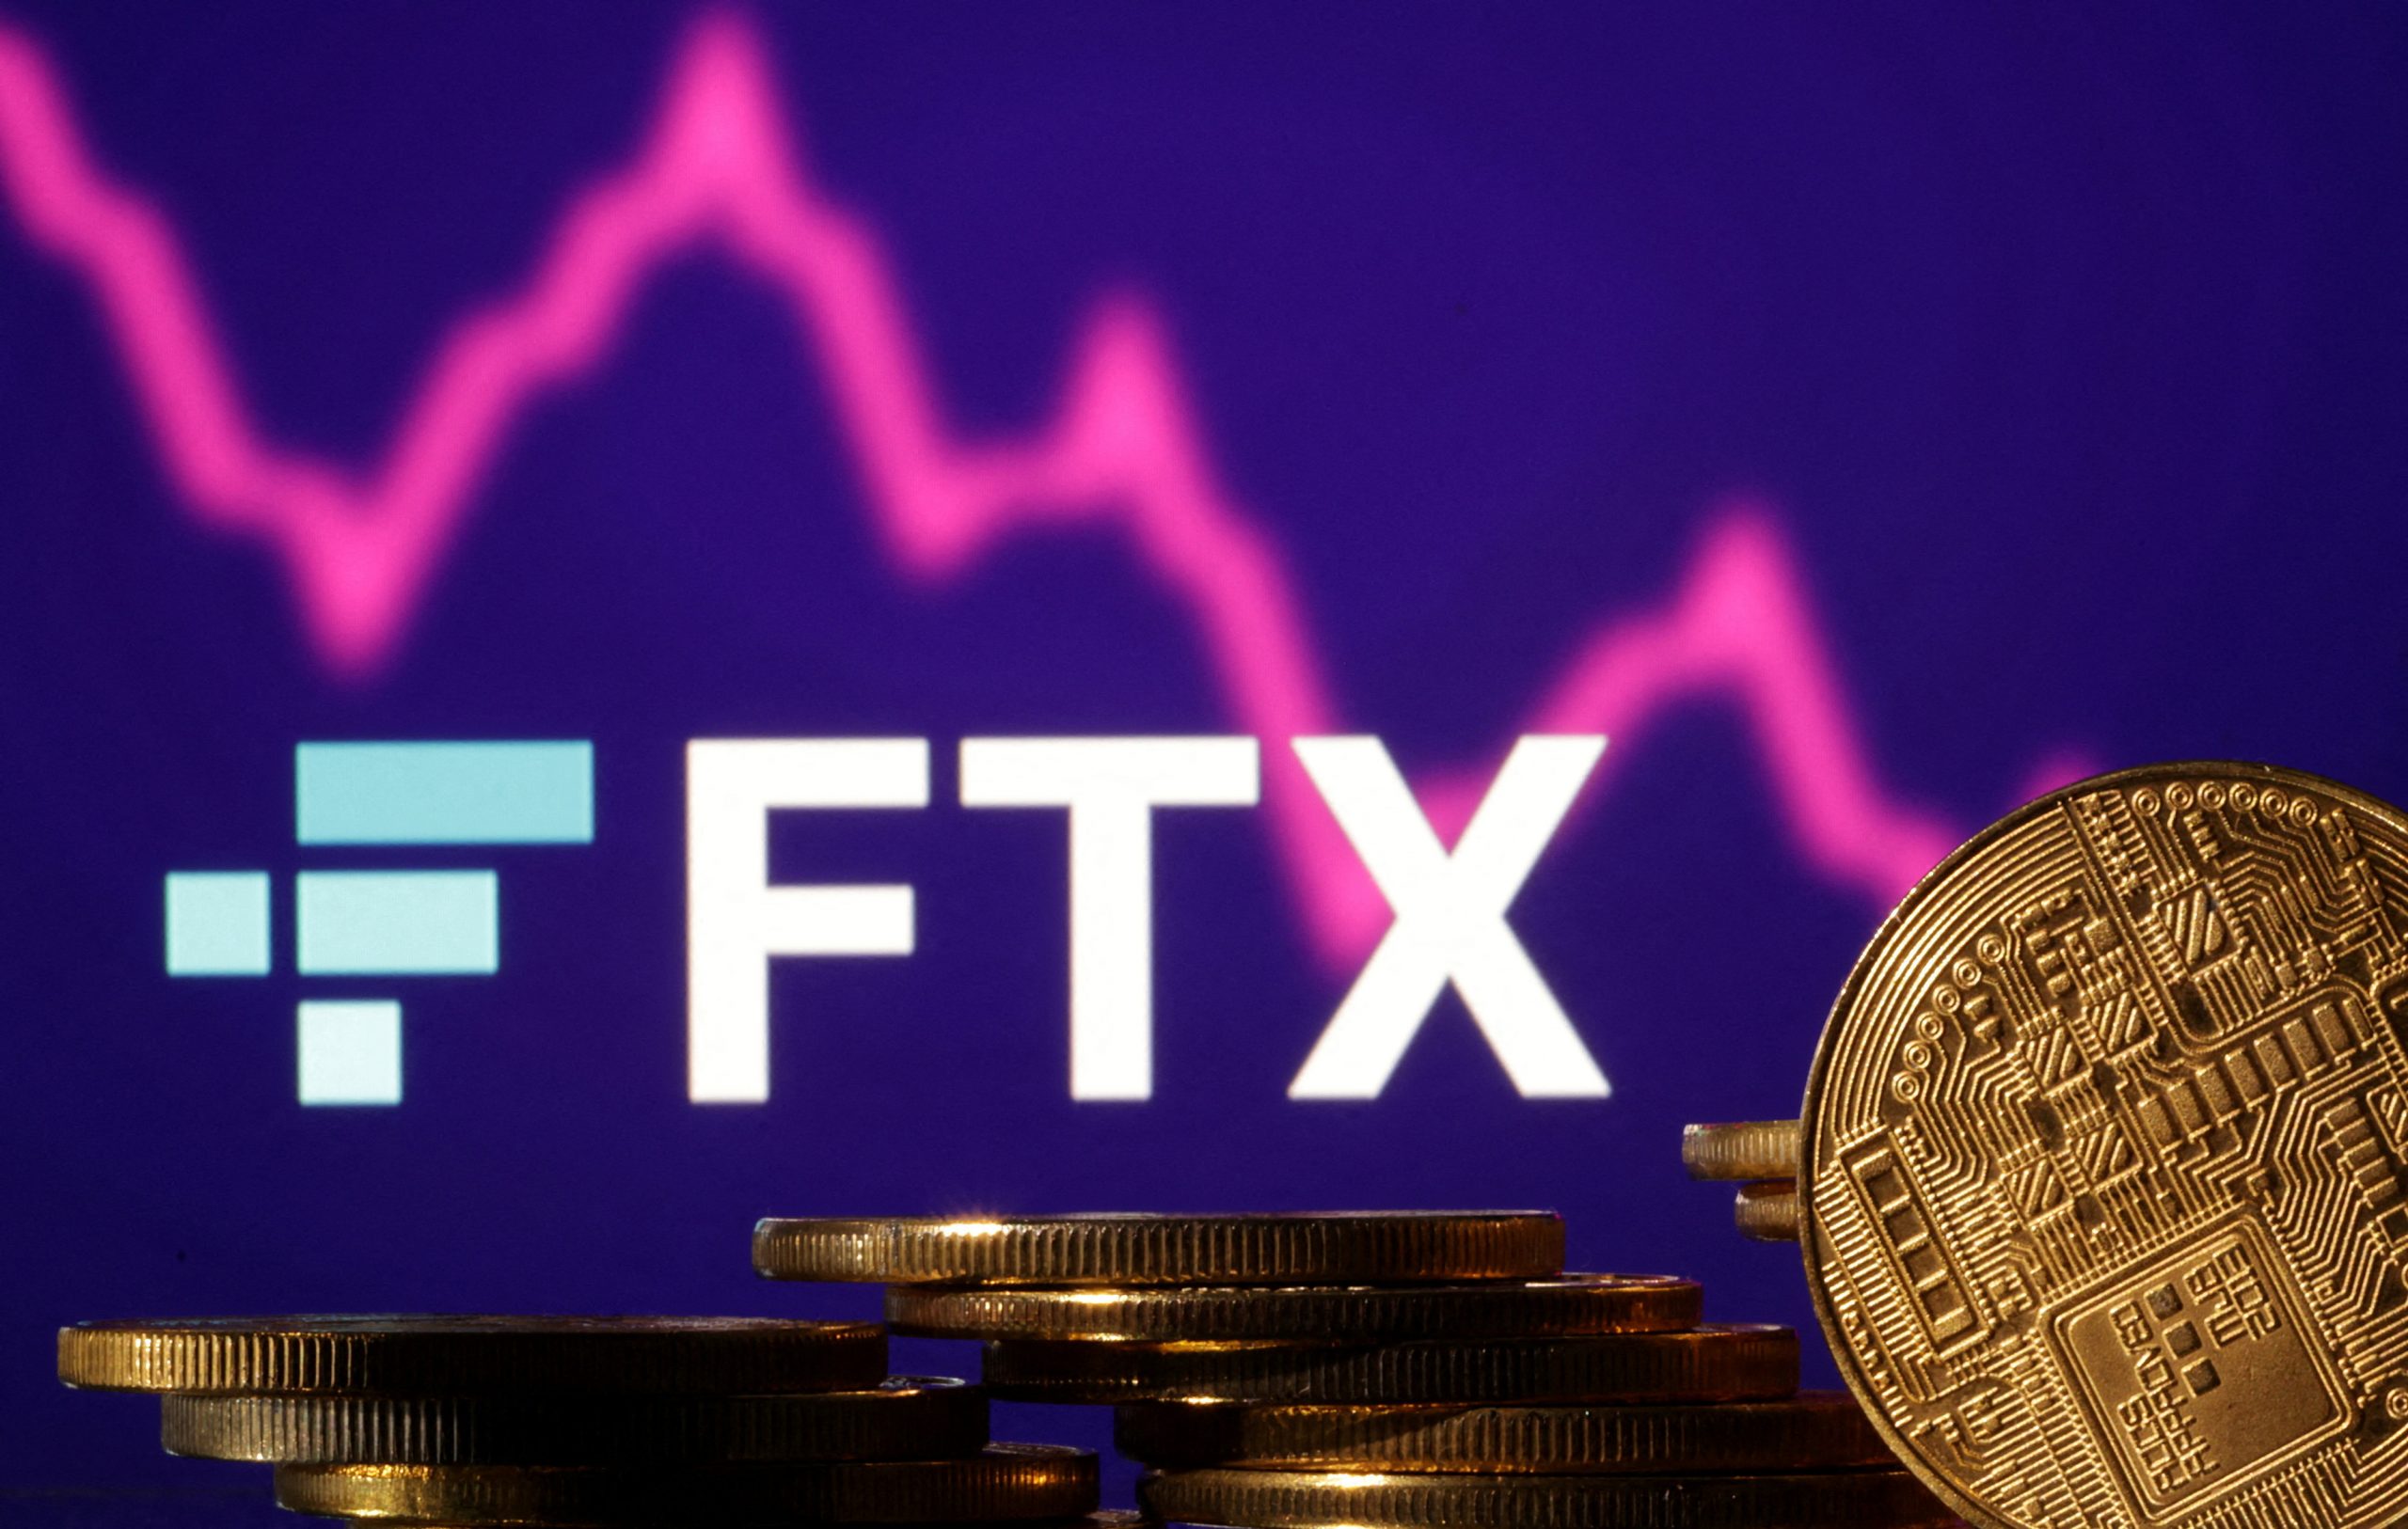 FTX assets under management